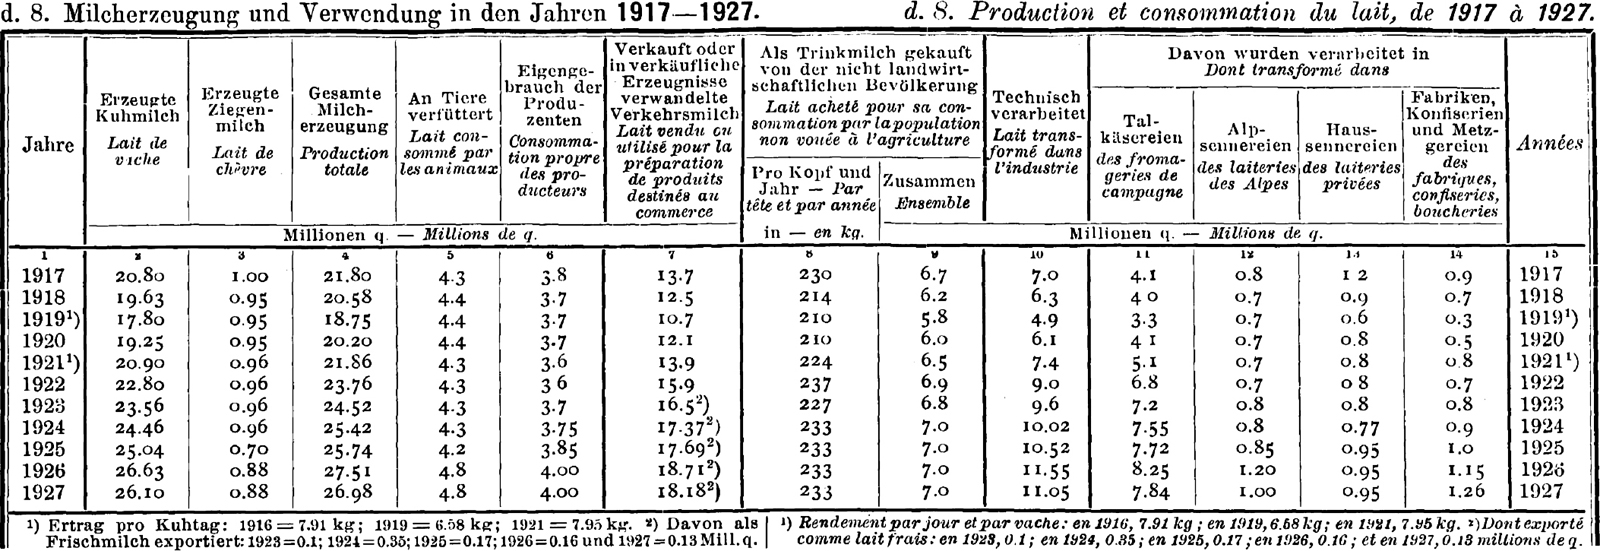 Stat. Jahrbuch 1927